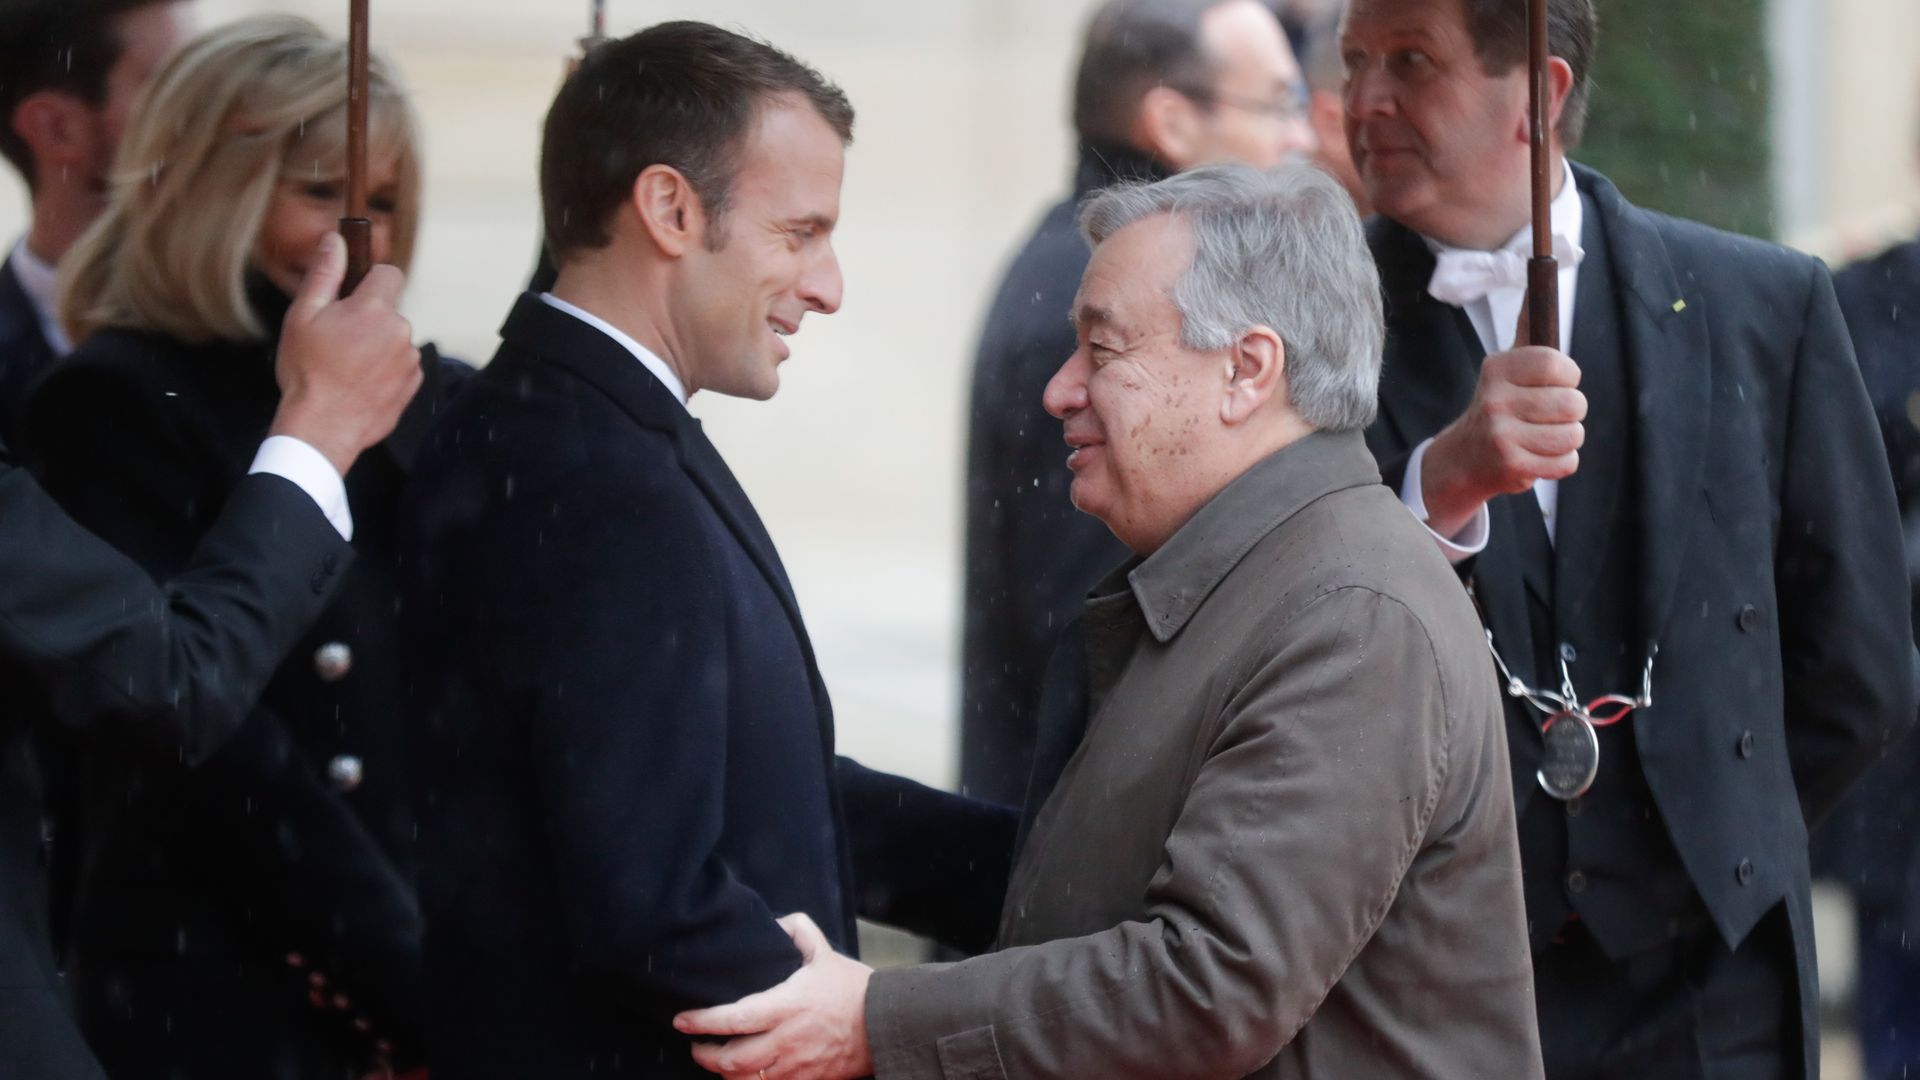 Macron shaking hands with Antonio Guterres